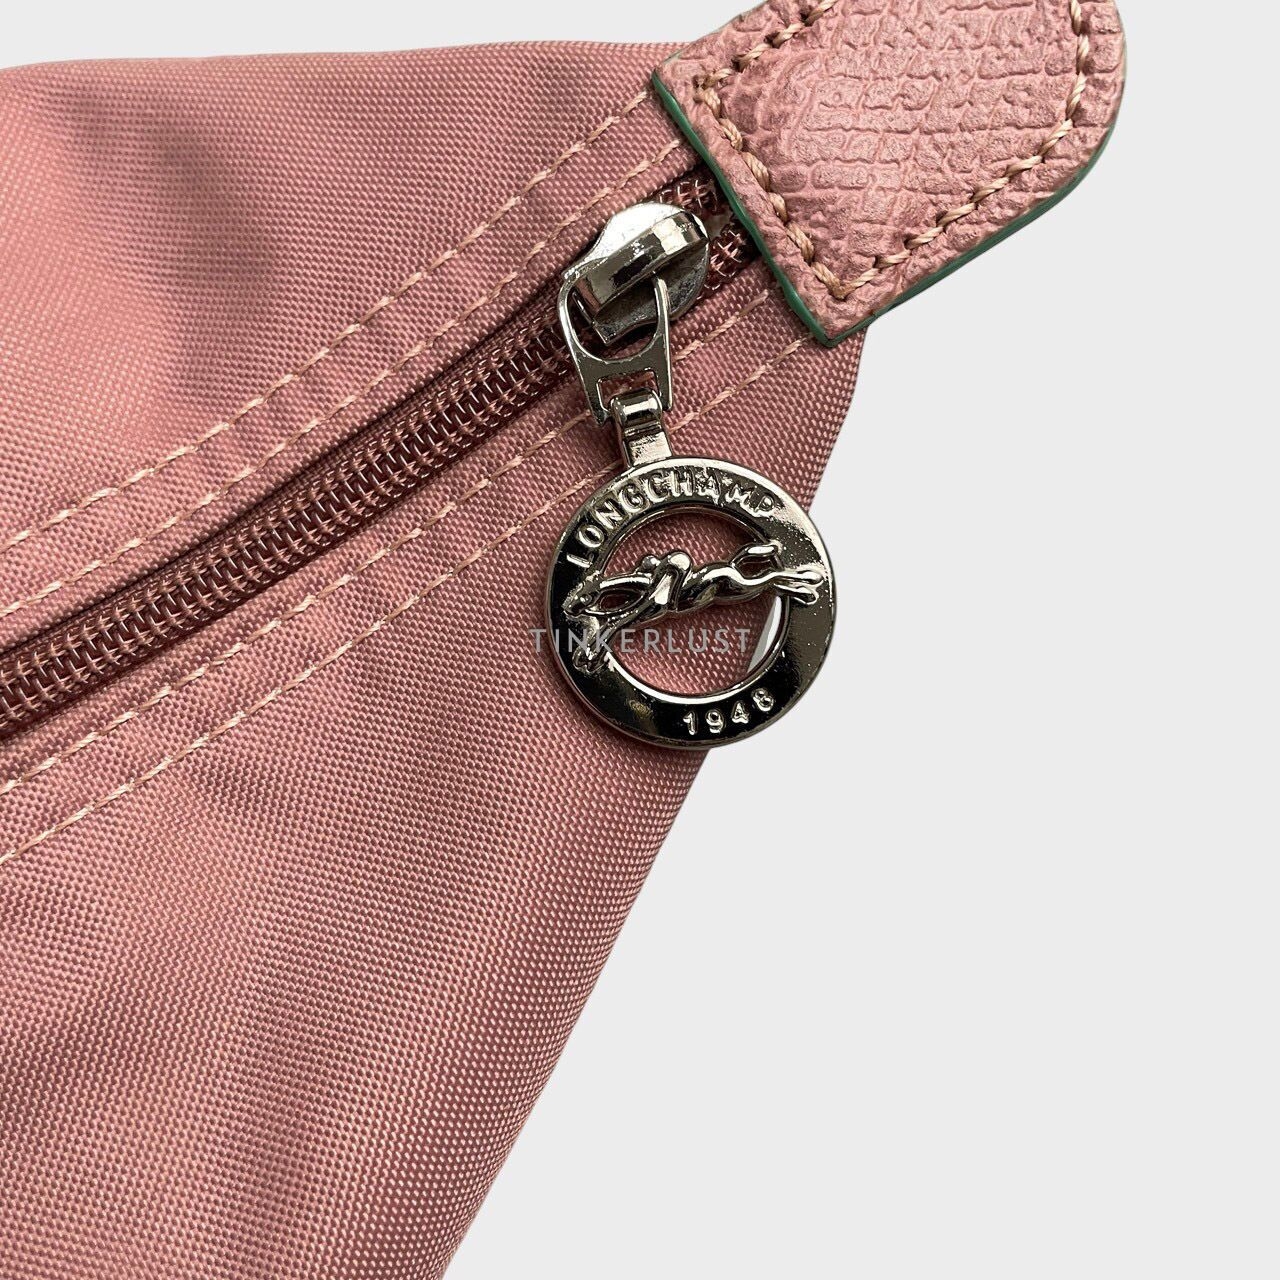 Longchamp Le Pliage Medium SH Mauve Tote Bag